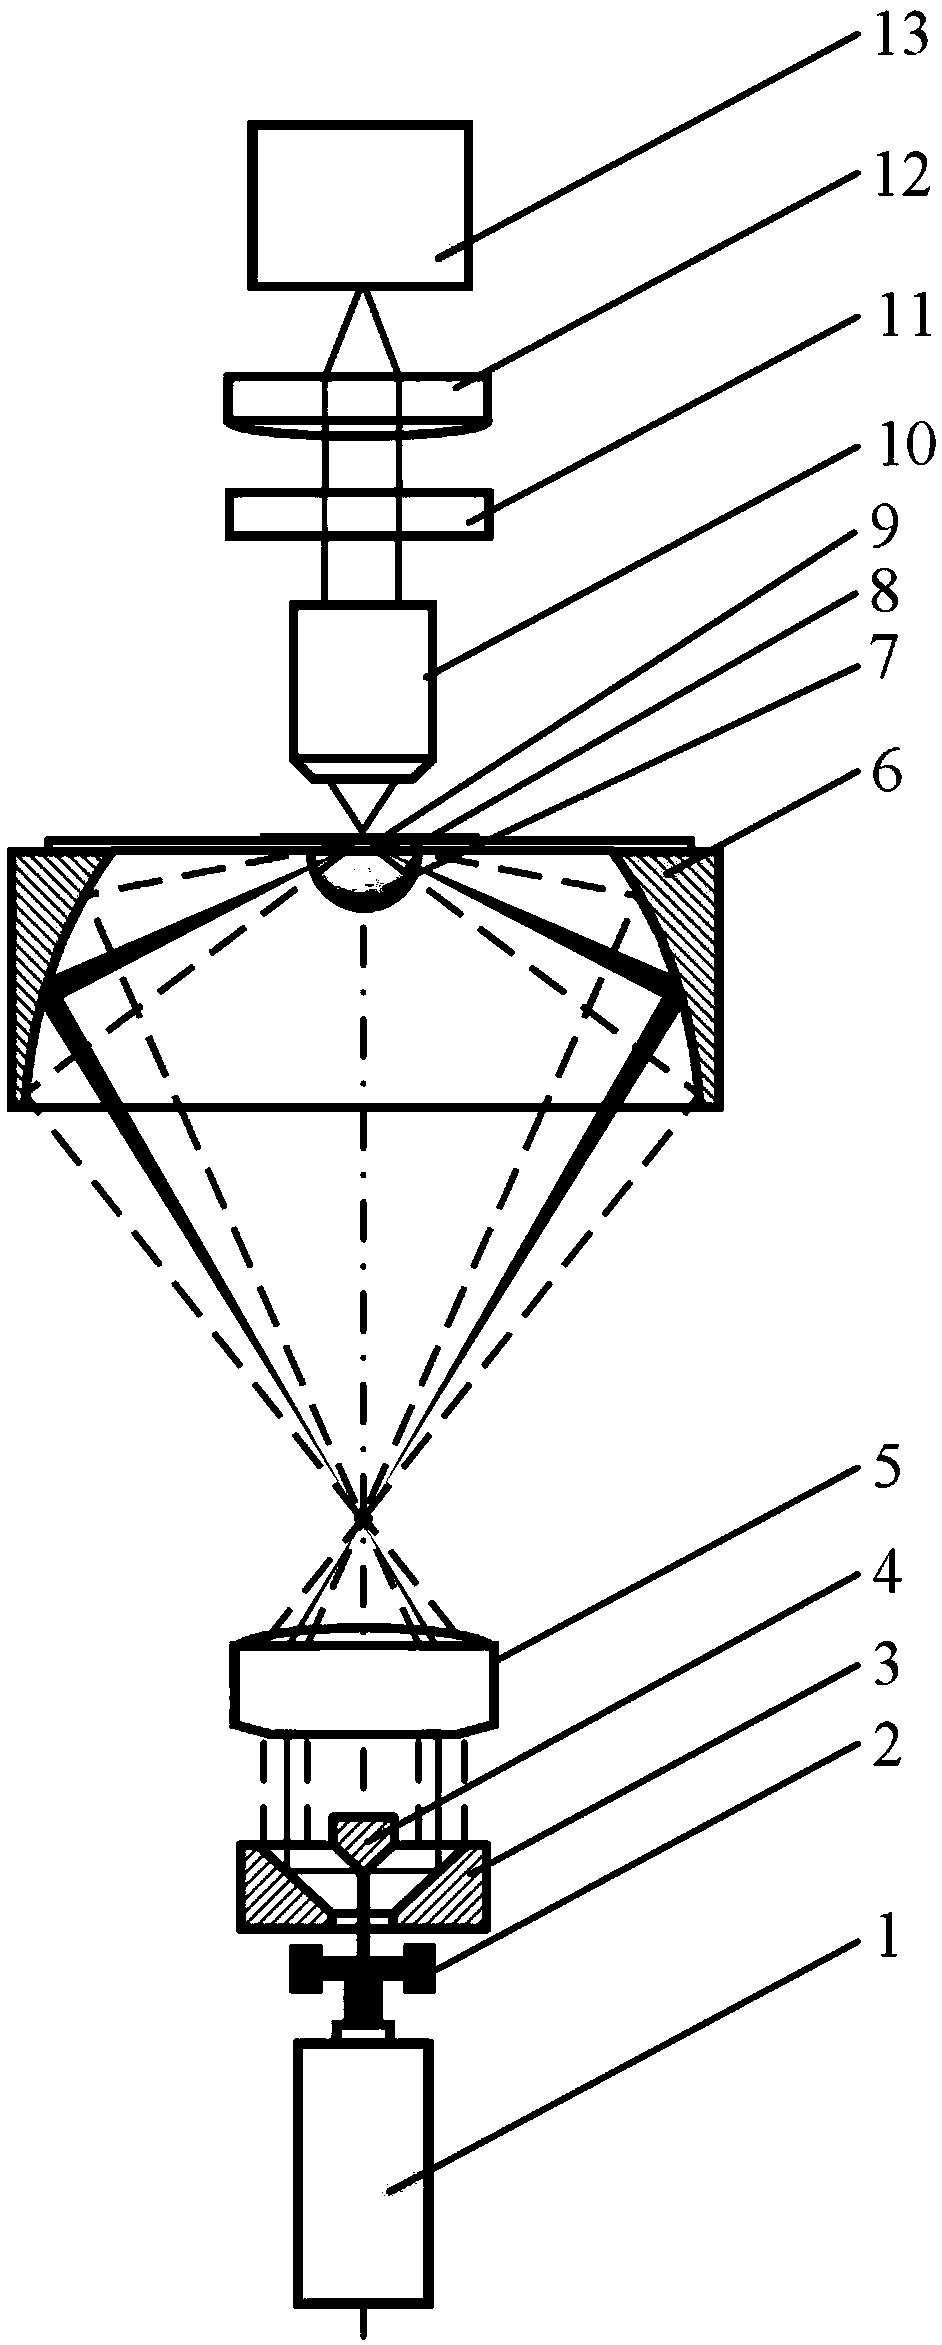 Tunable Penetration Depth Tirf Microscope and Method Based on Ellipsoidal Mirror